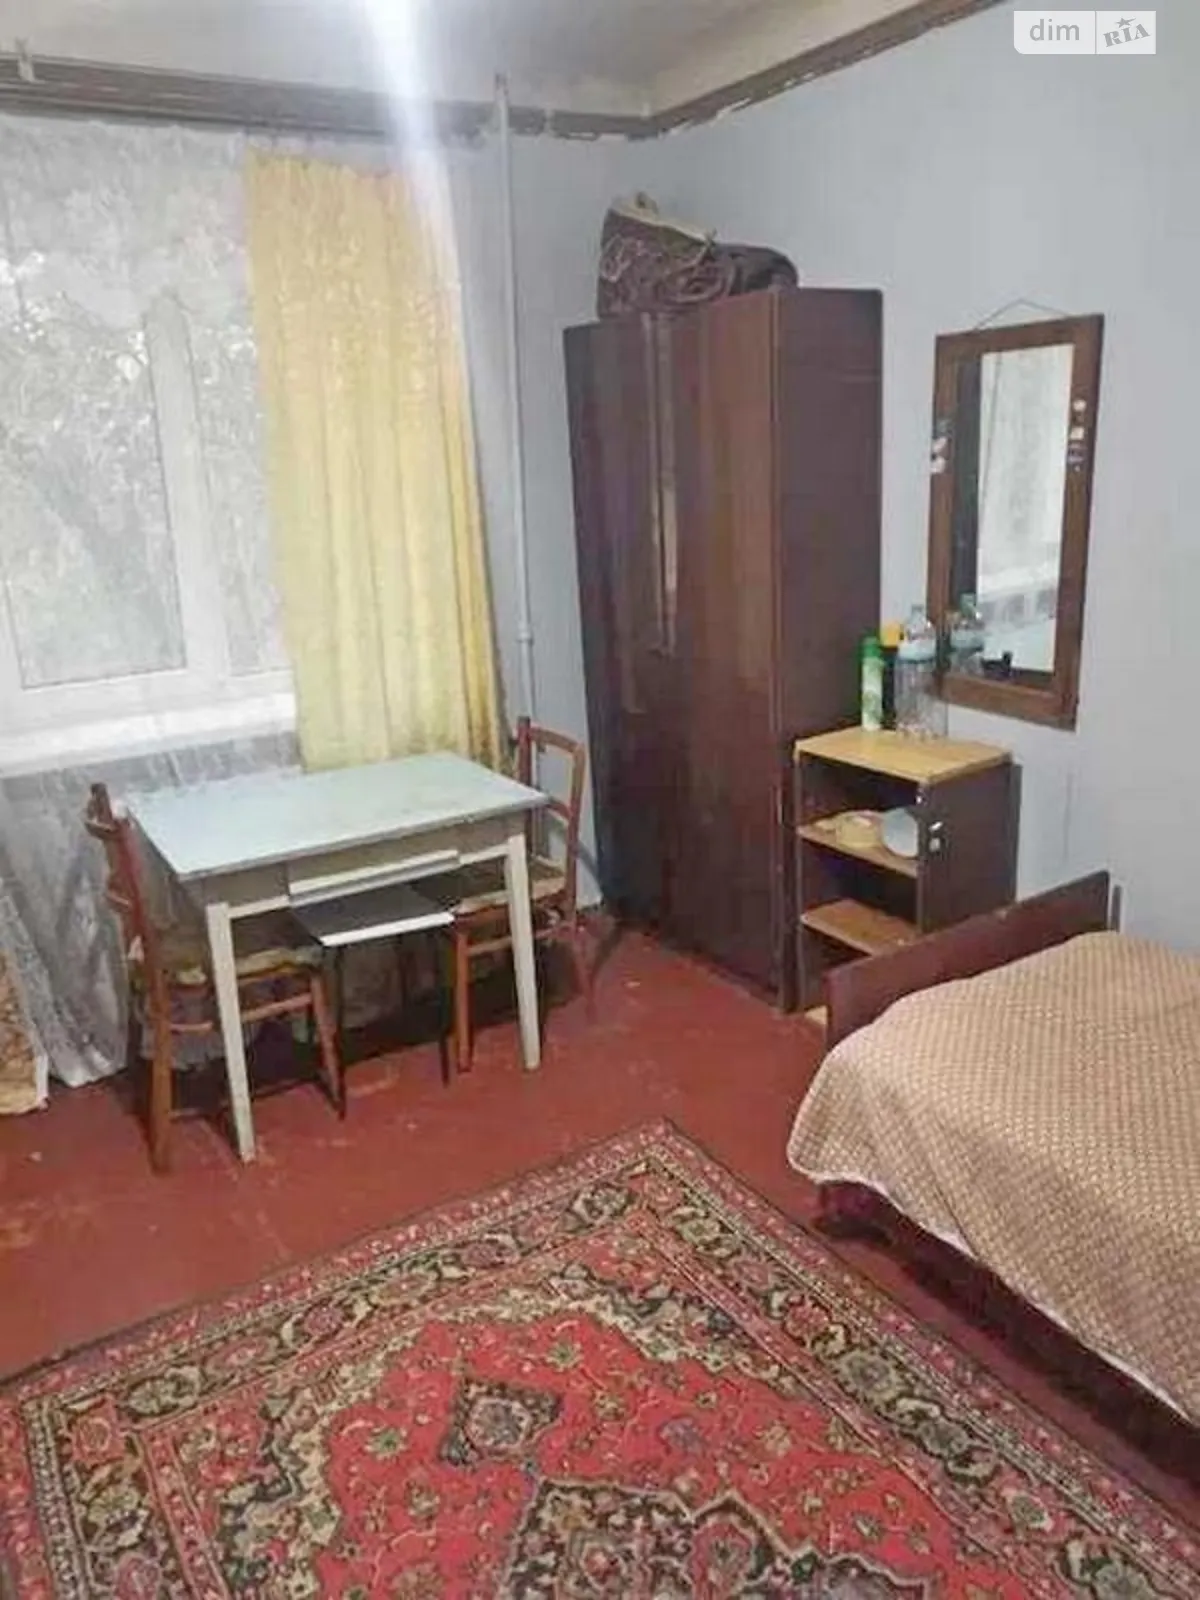 Продается комната 22 кв. м в Харькове - фото 2